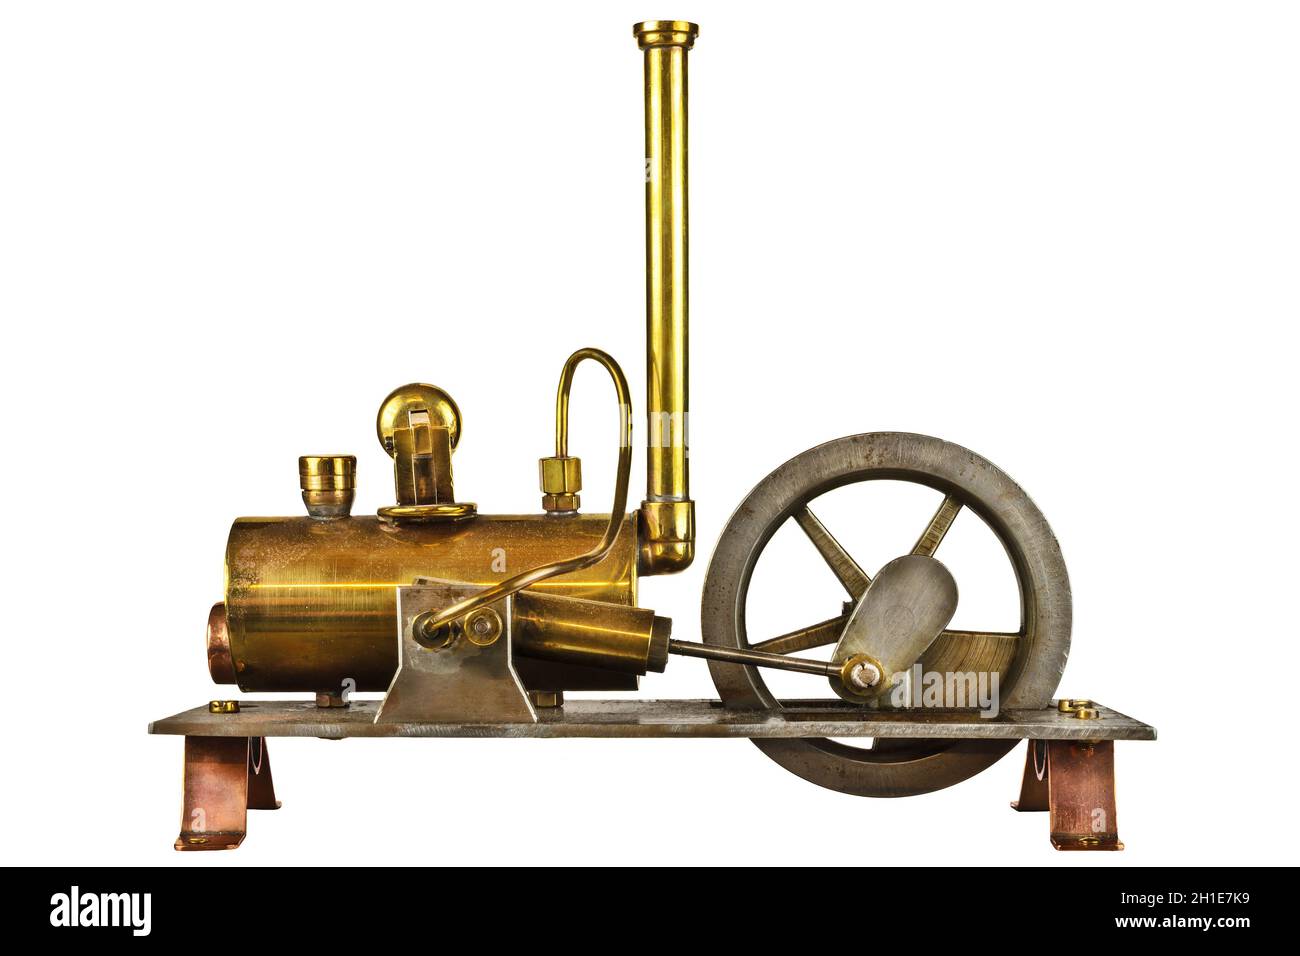 Maquina de vapor revolucion industrial recortadas de stock - Alamy